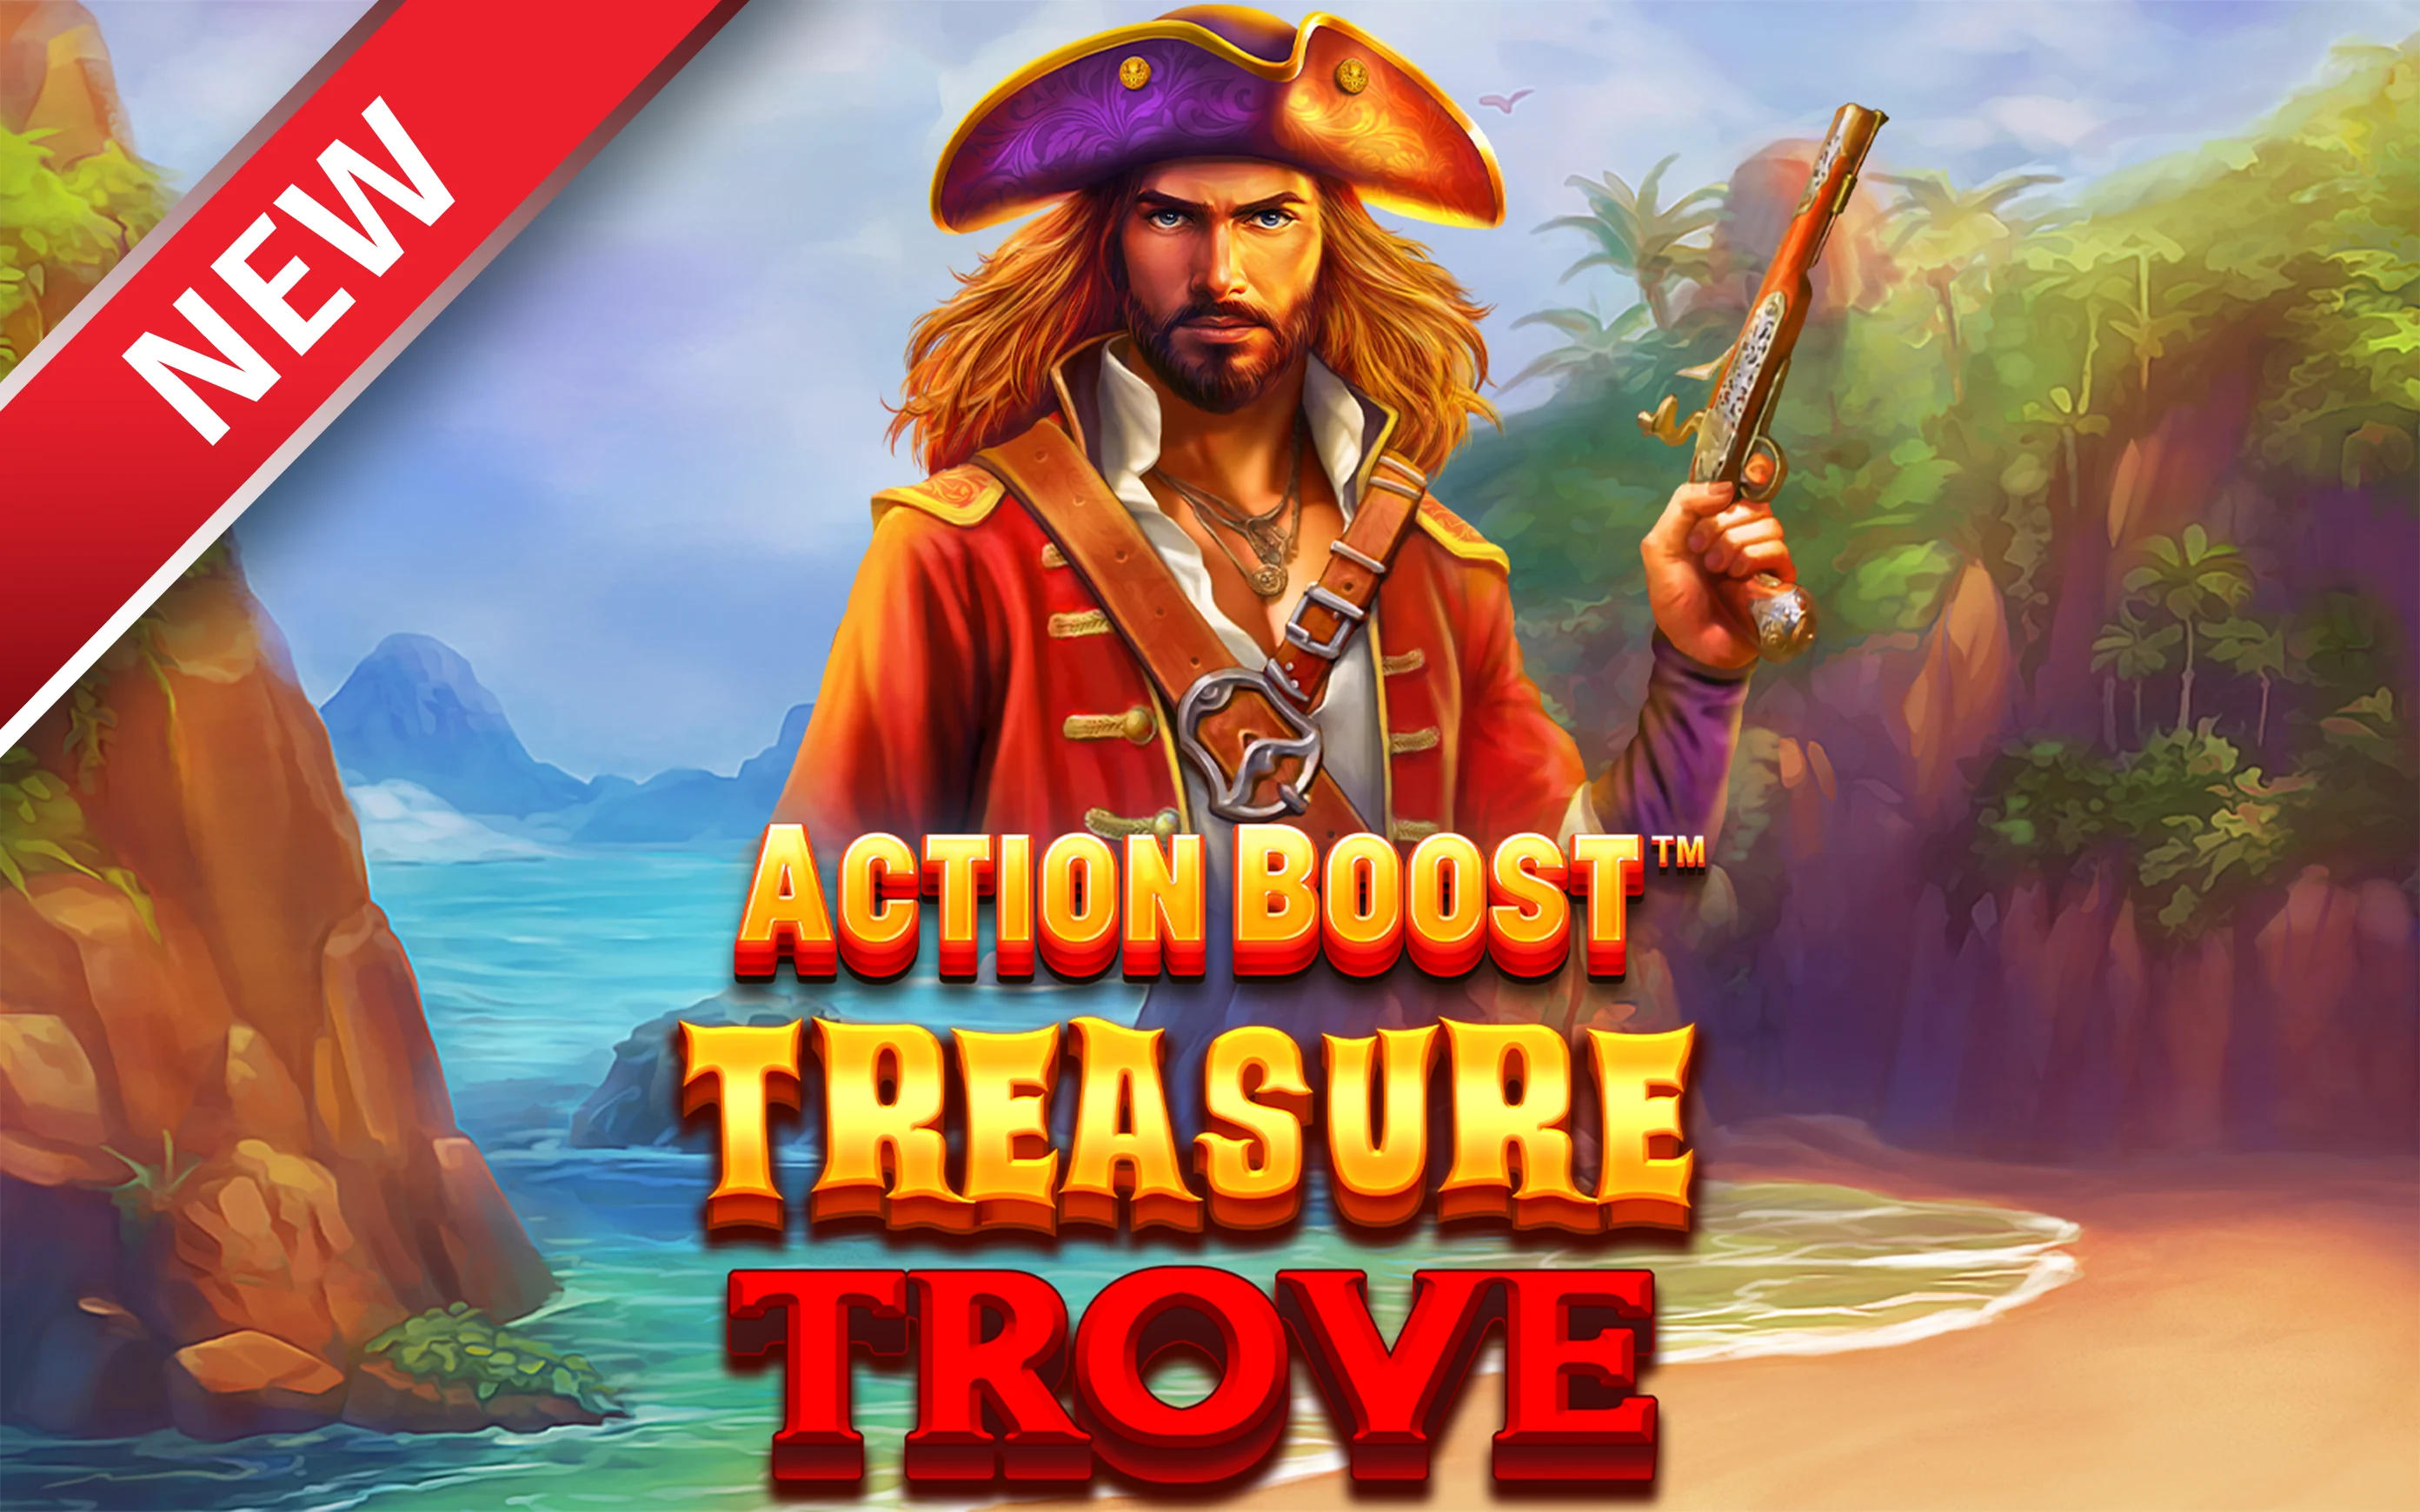 Грайте у Action Boost™ Treasure Trove™ в онлайн-казино Starcasino.be